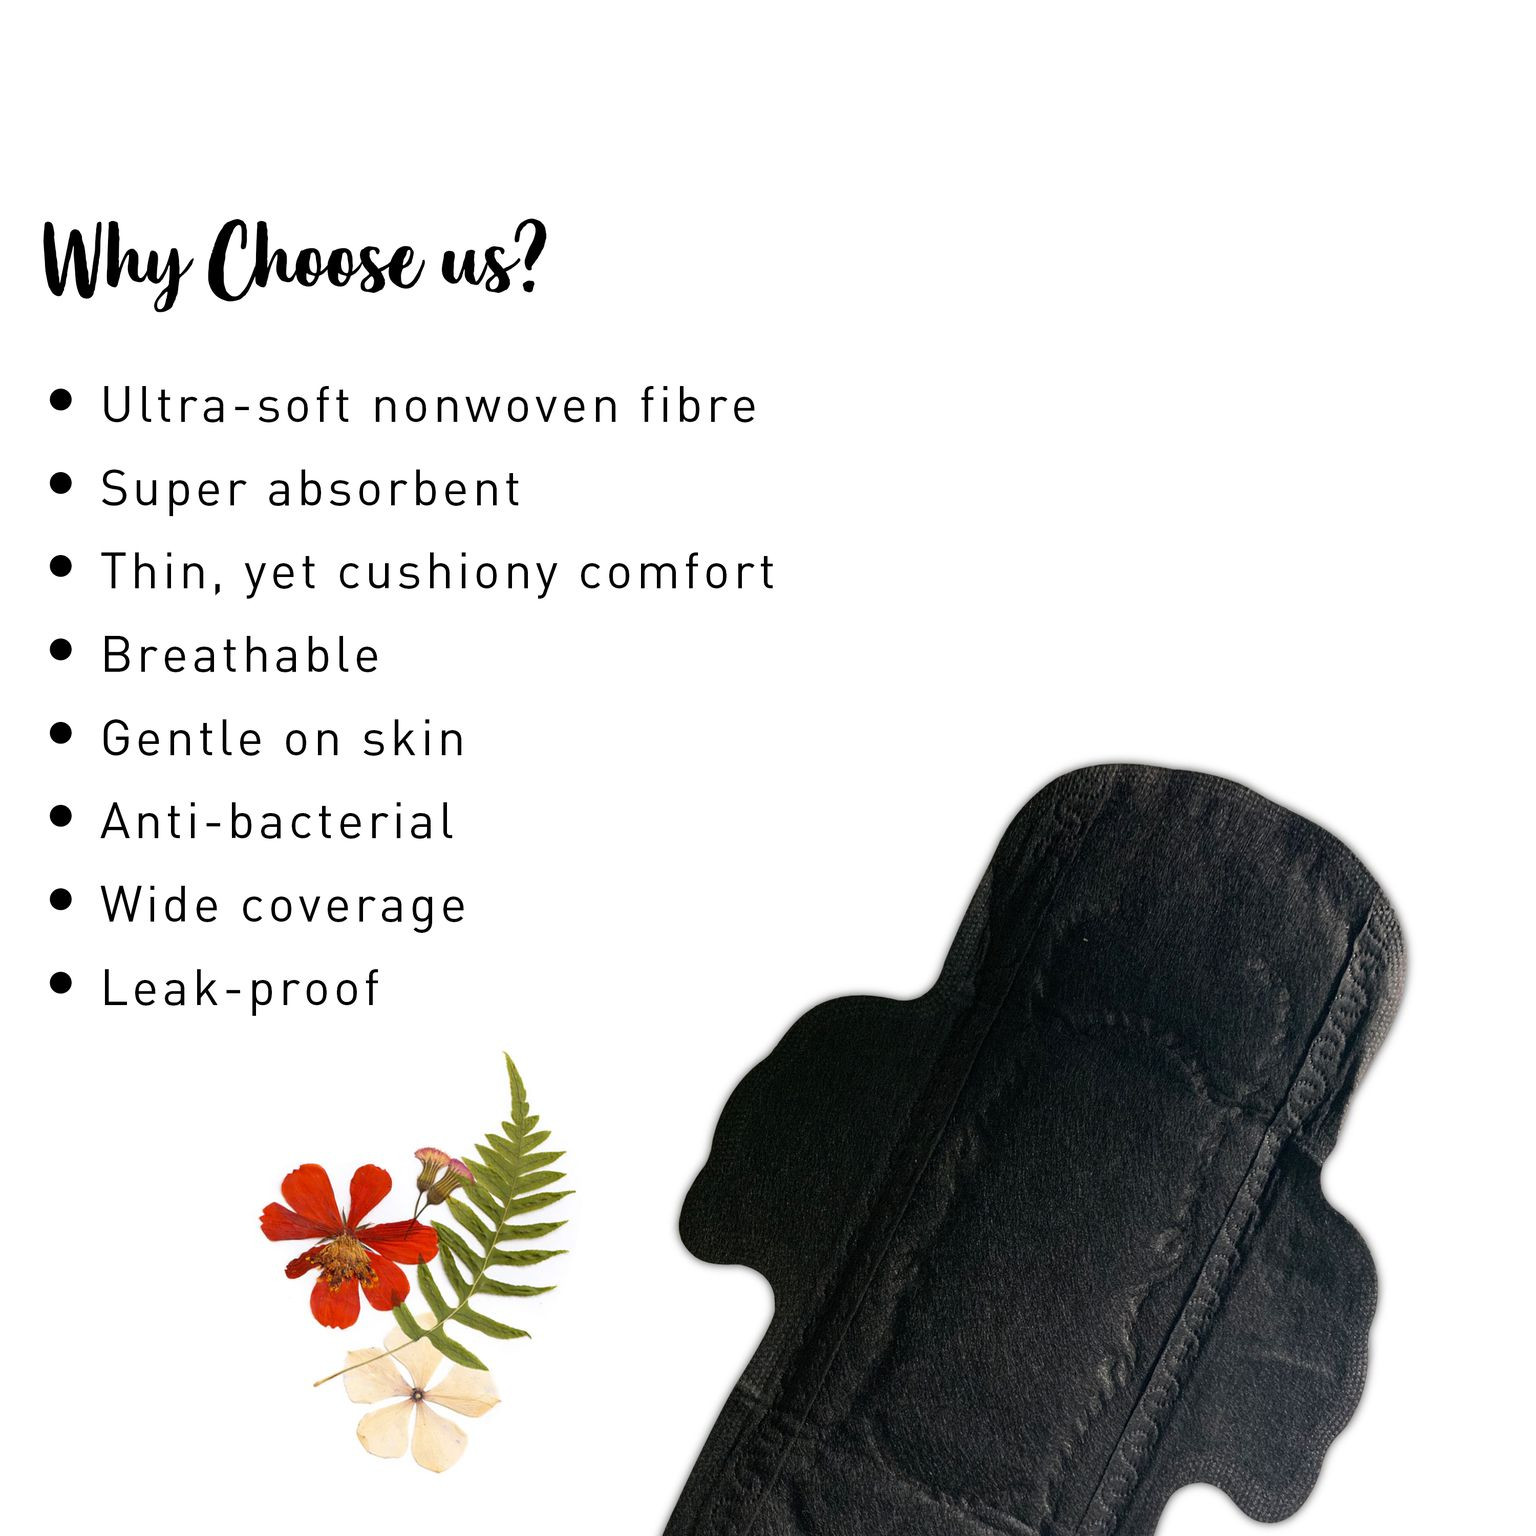 Buy Sirona 100% Rash Free Sanitary Pads for Women (XL) - Pack of 30 Online